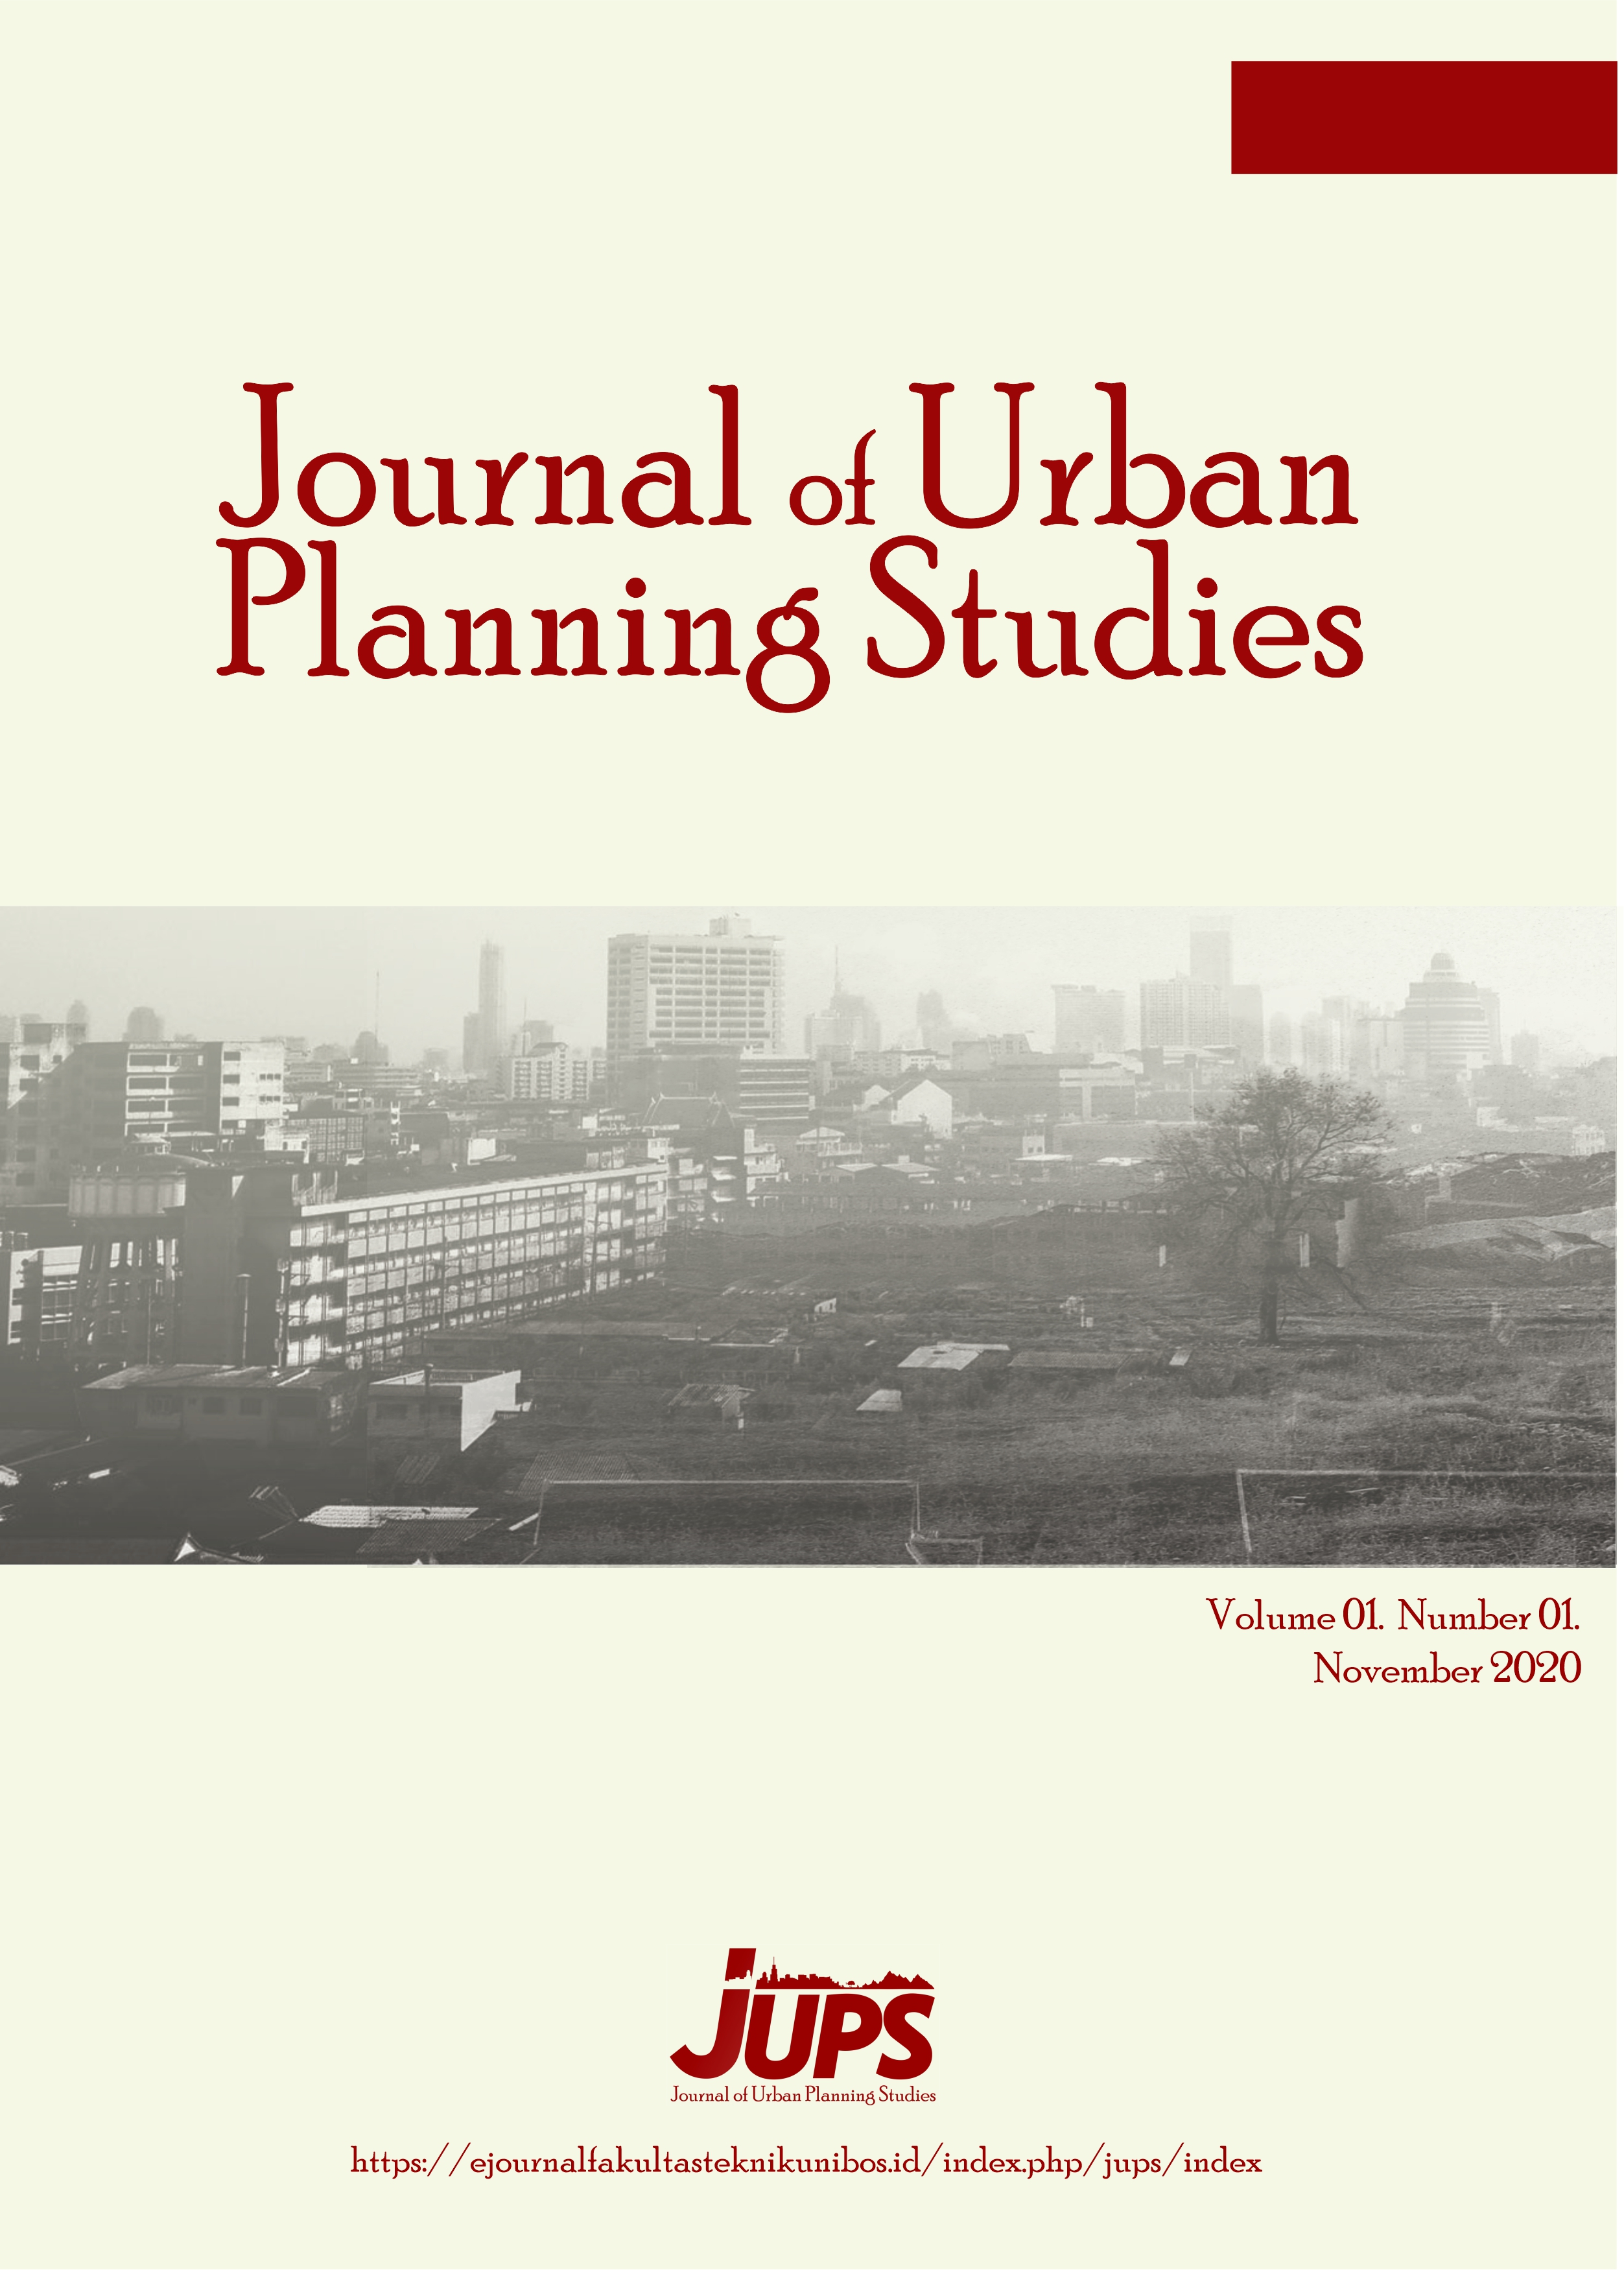 					Lihat Vol 1 No 1 (2020): Journal of Urban Planning Studies, November 2020
				